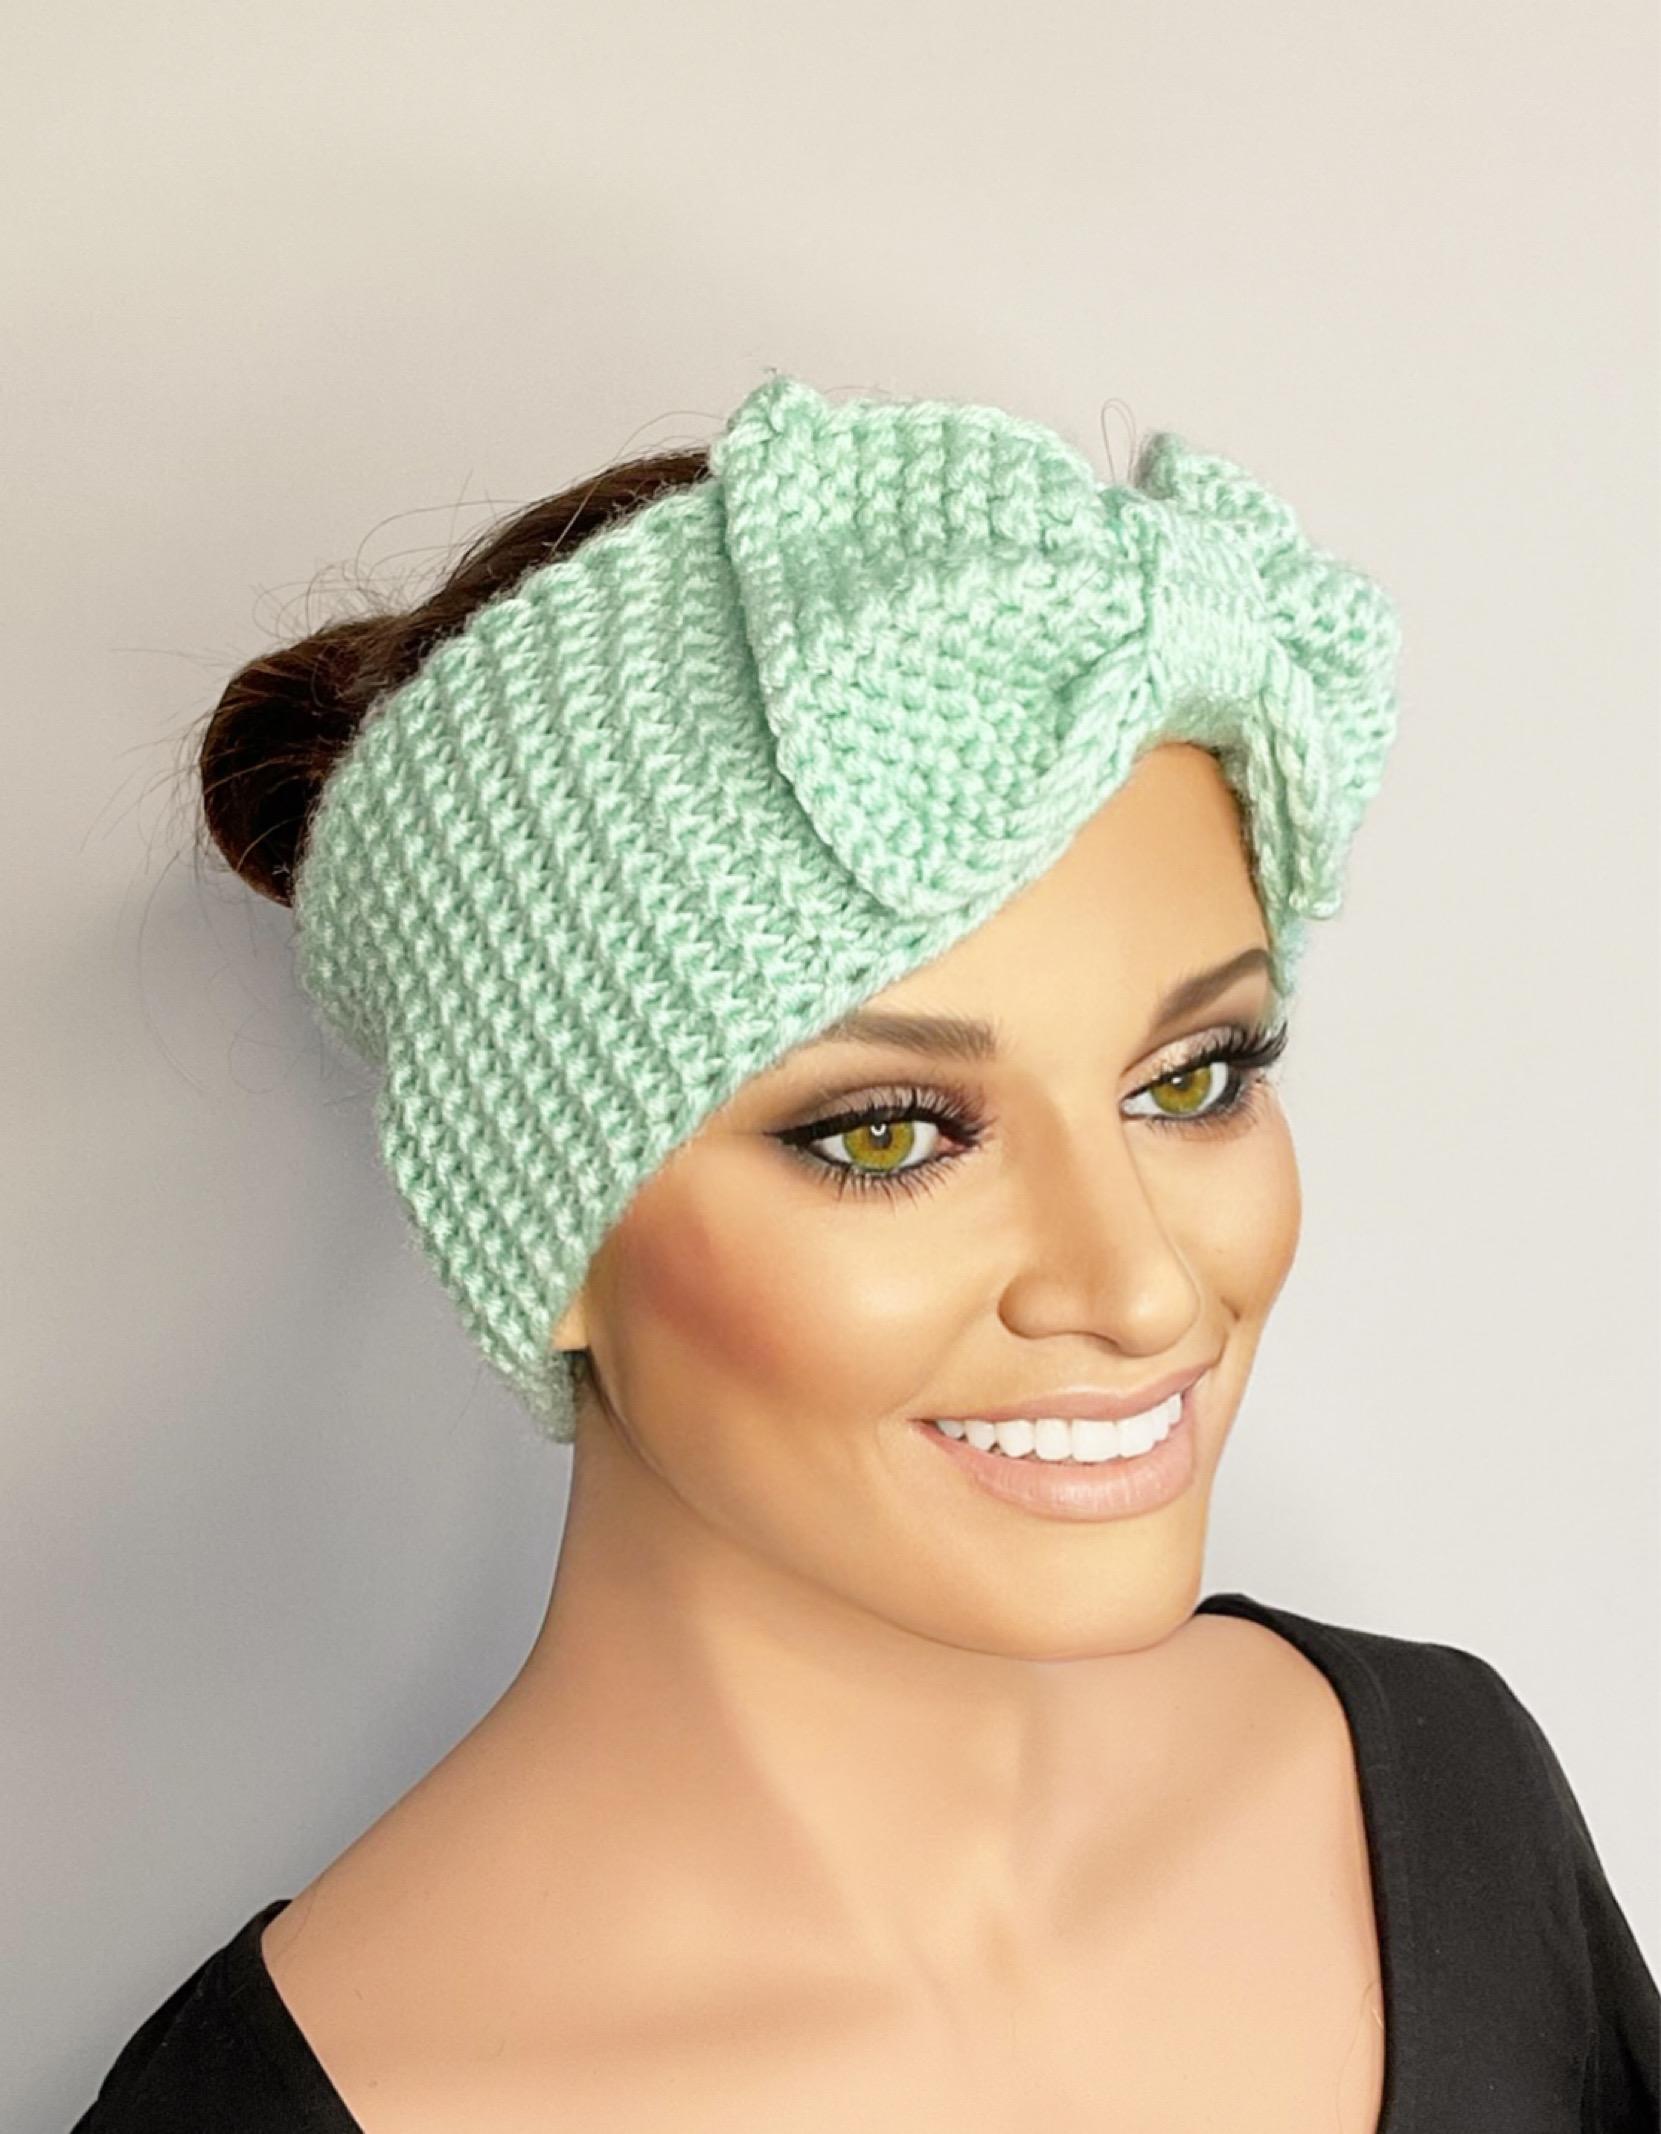 Mint green knitted headband